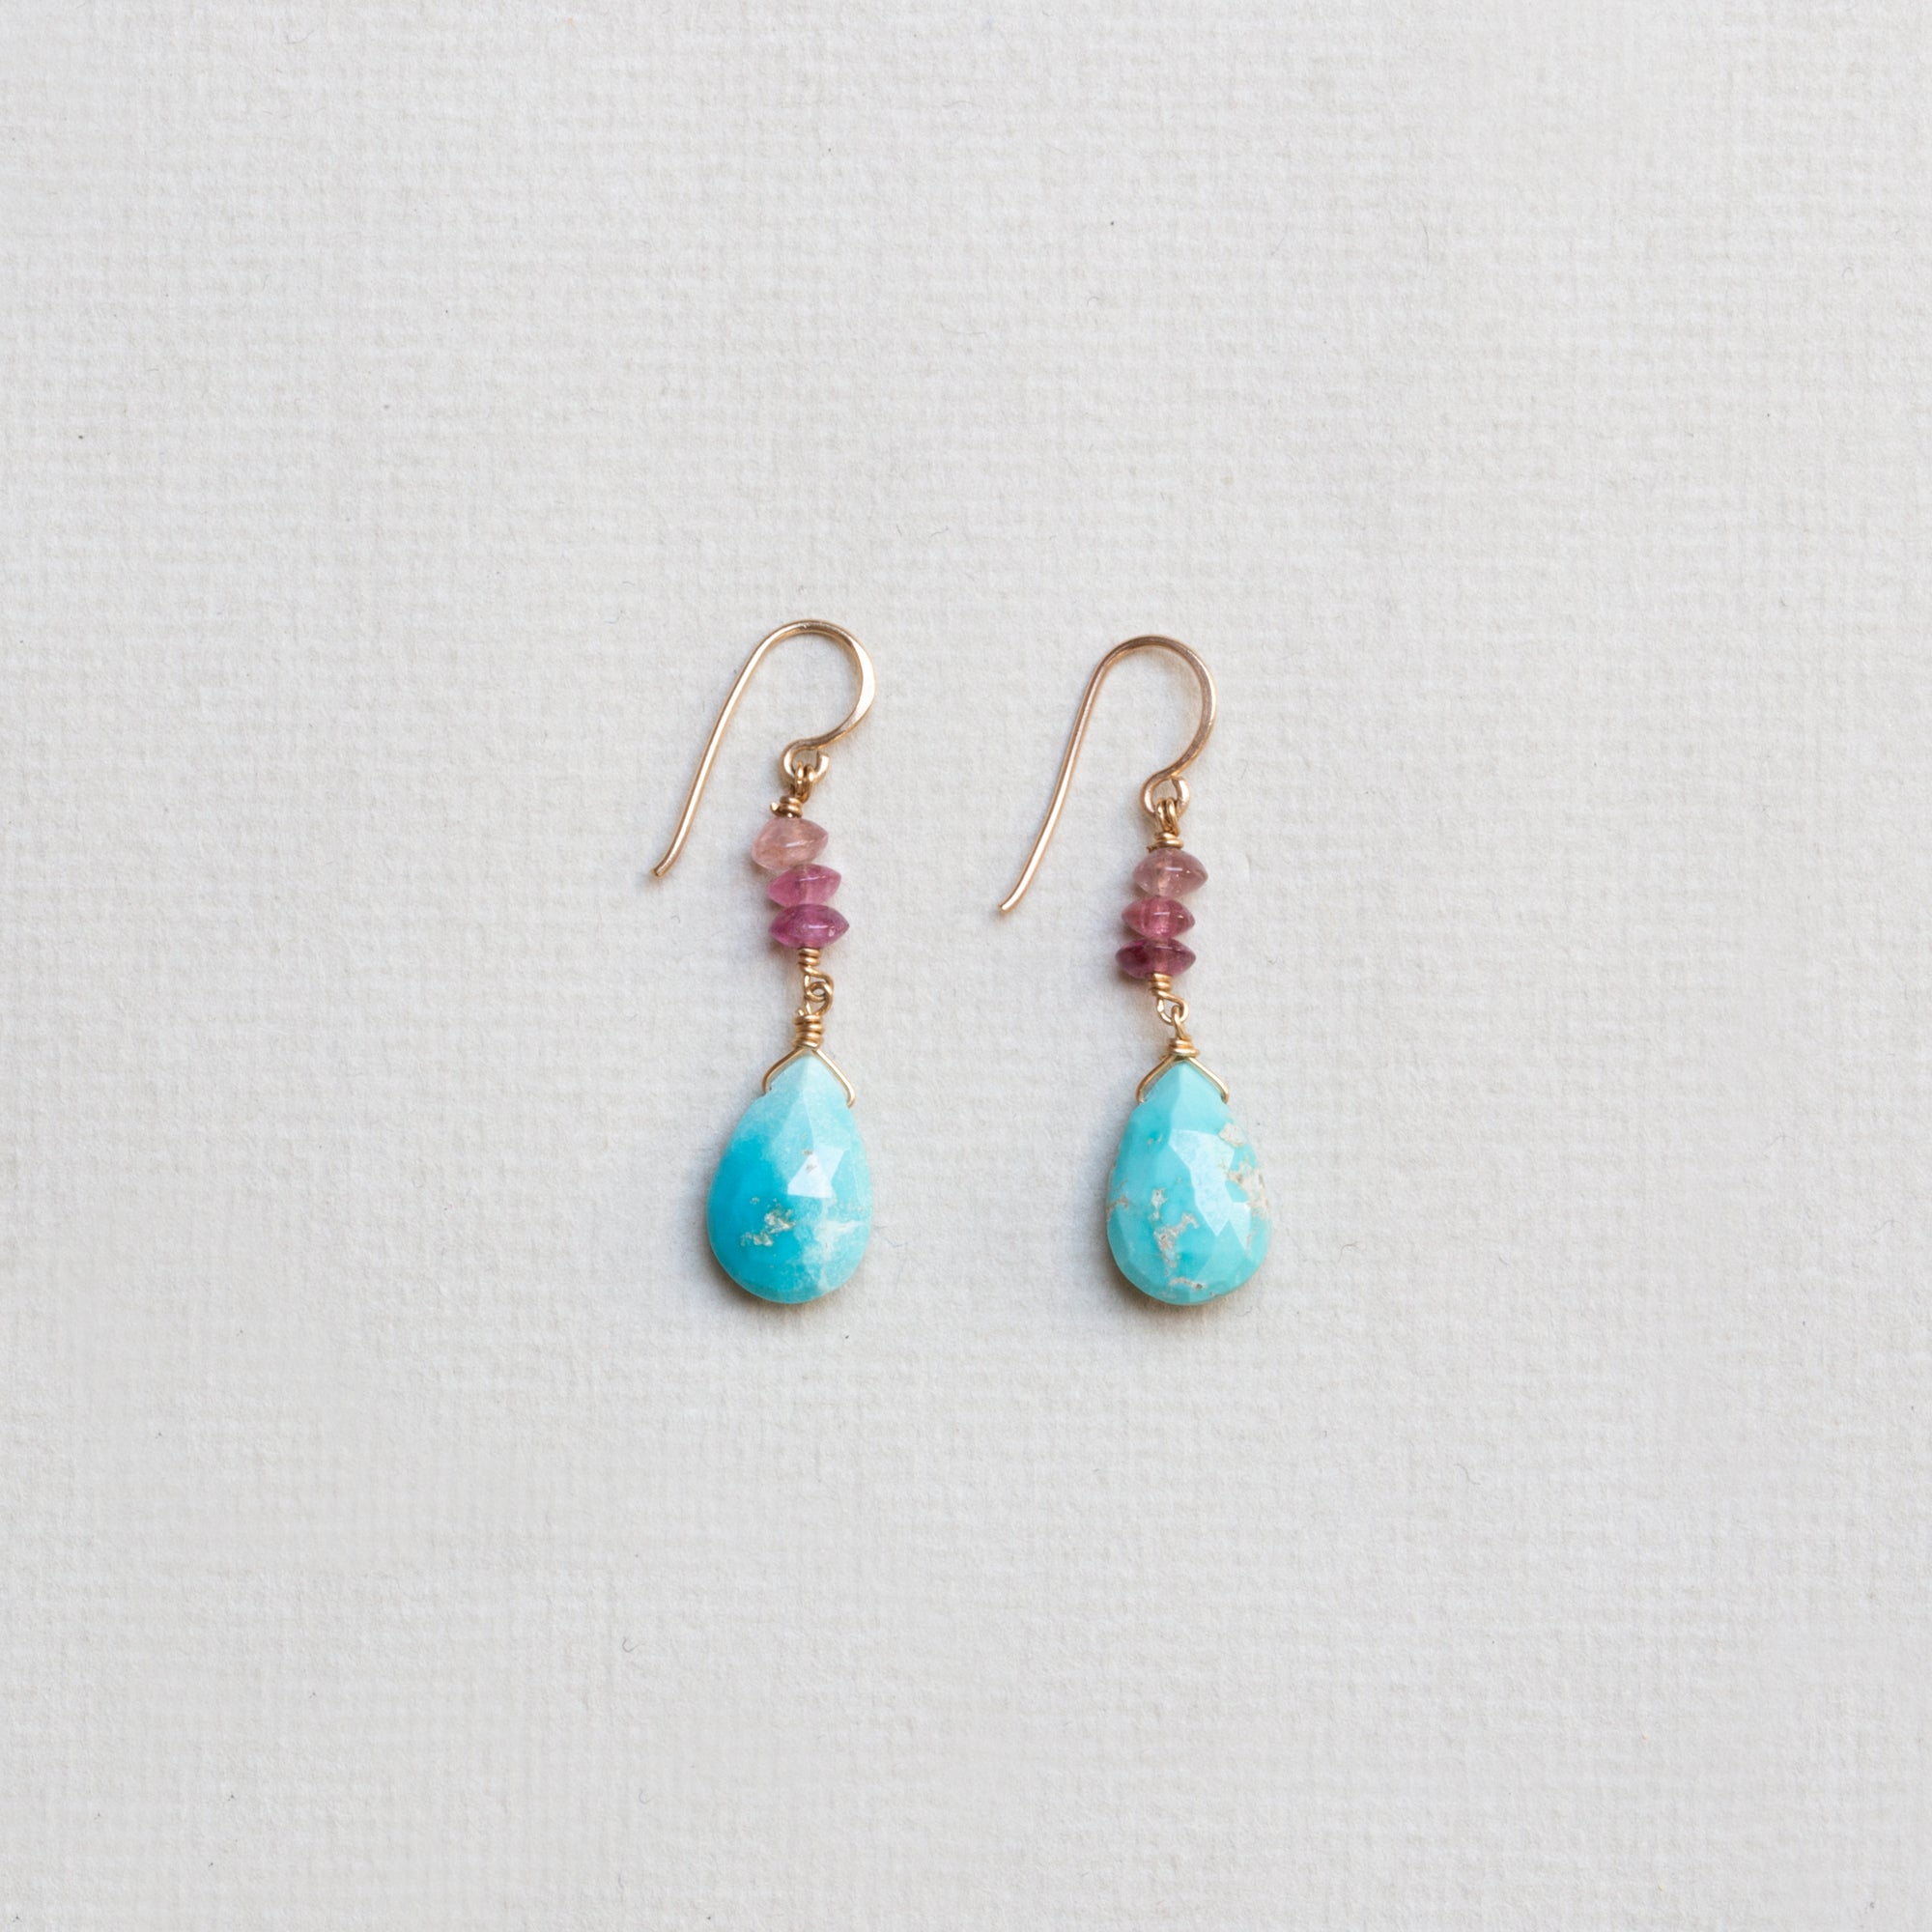 Pink Tourmaline & Turquoise Drop Earrings